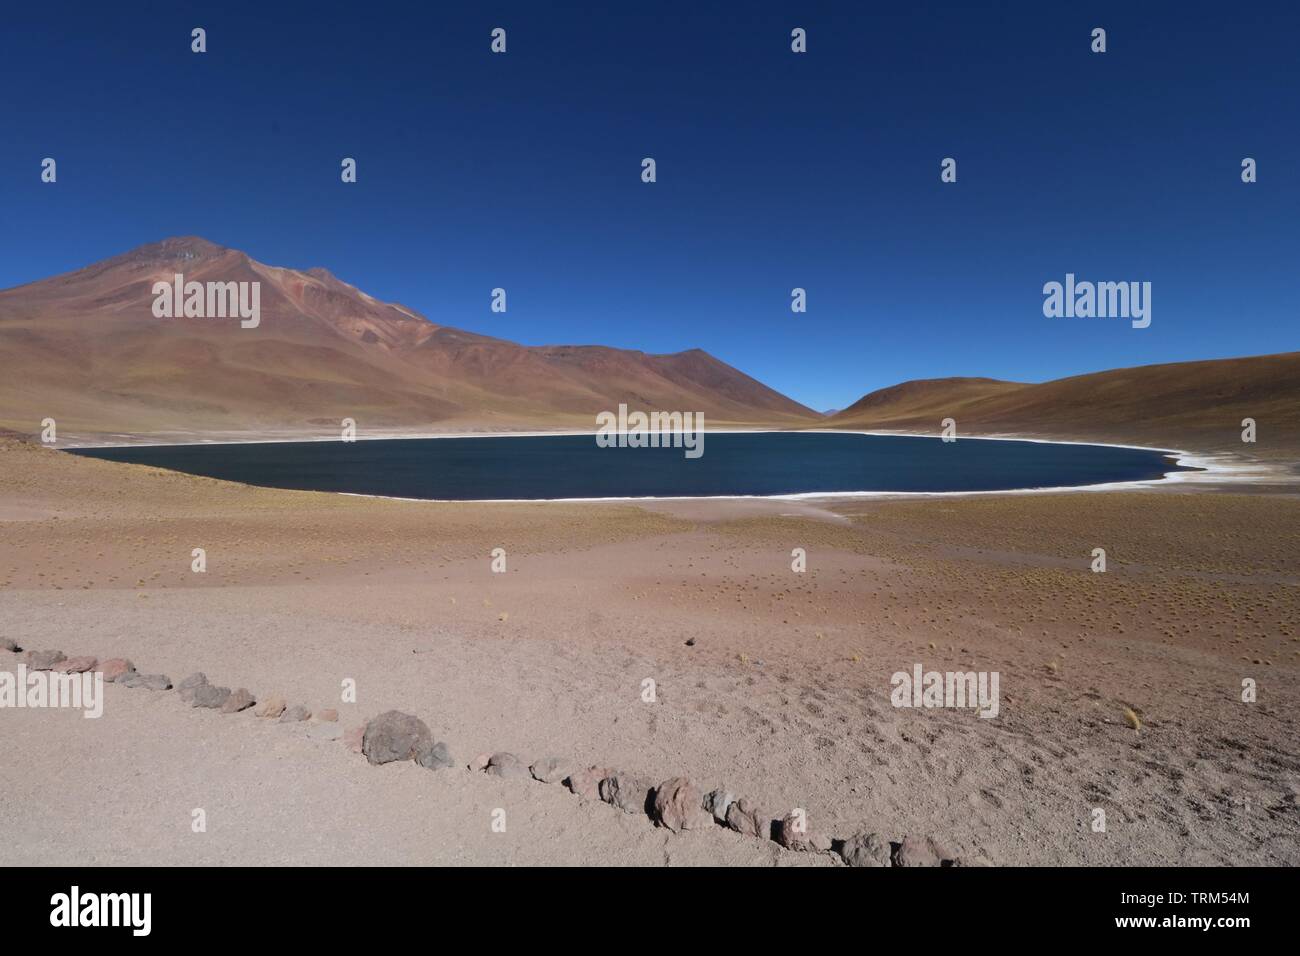 Foto das lagunas Altiplanicas - Laguna Miscanti - Laguna Miniques - Atacama Wüste - Deserto tun Atacama - Chile - Mochilao - Amerika do Sul - Rucksack Stockfoto